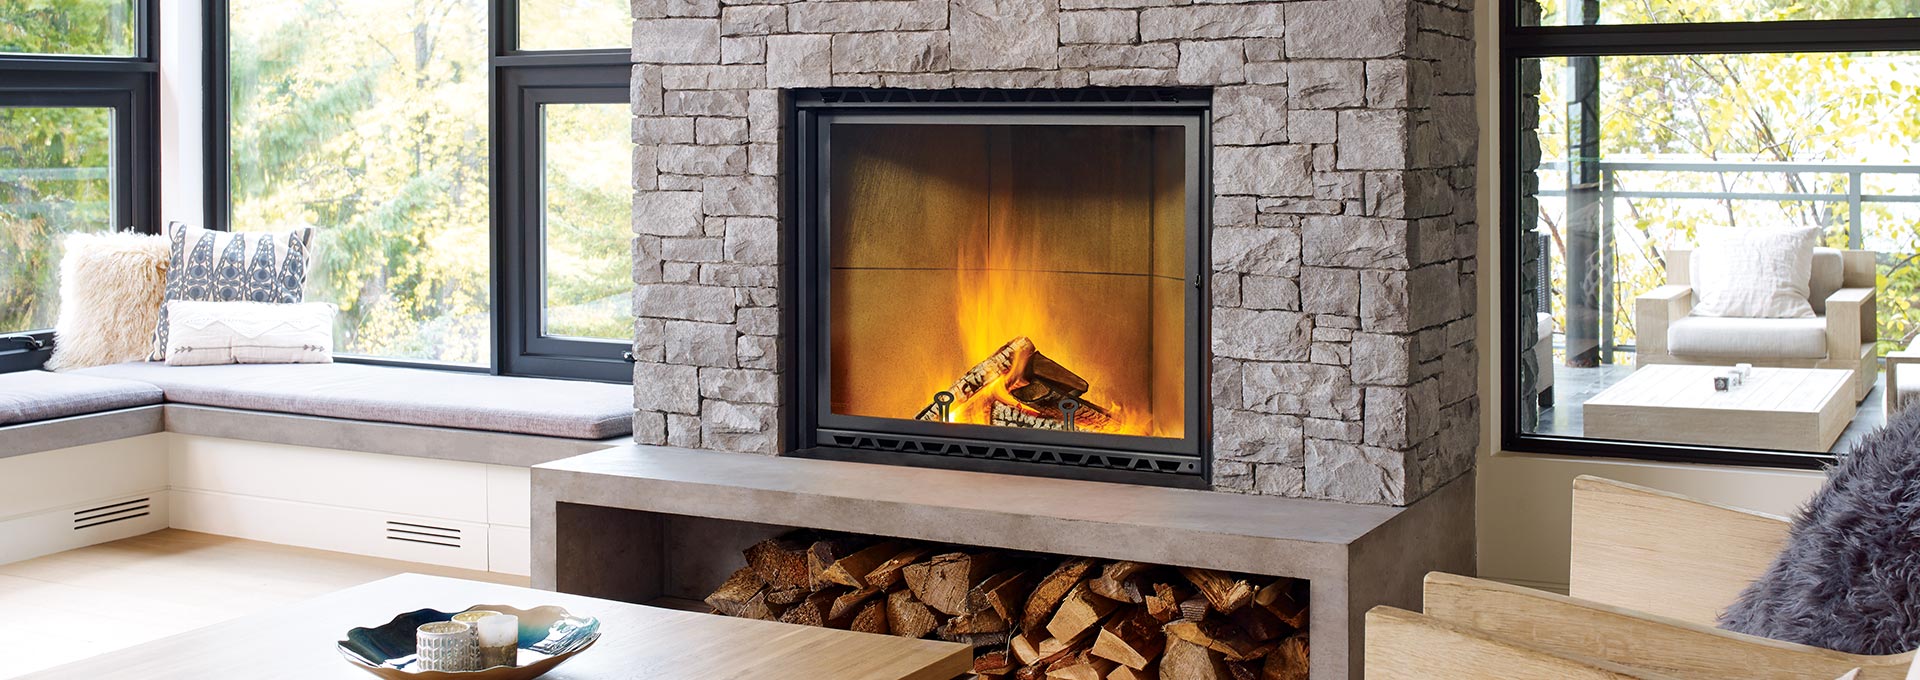 Types of Wood Burning Fireplaces 